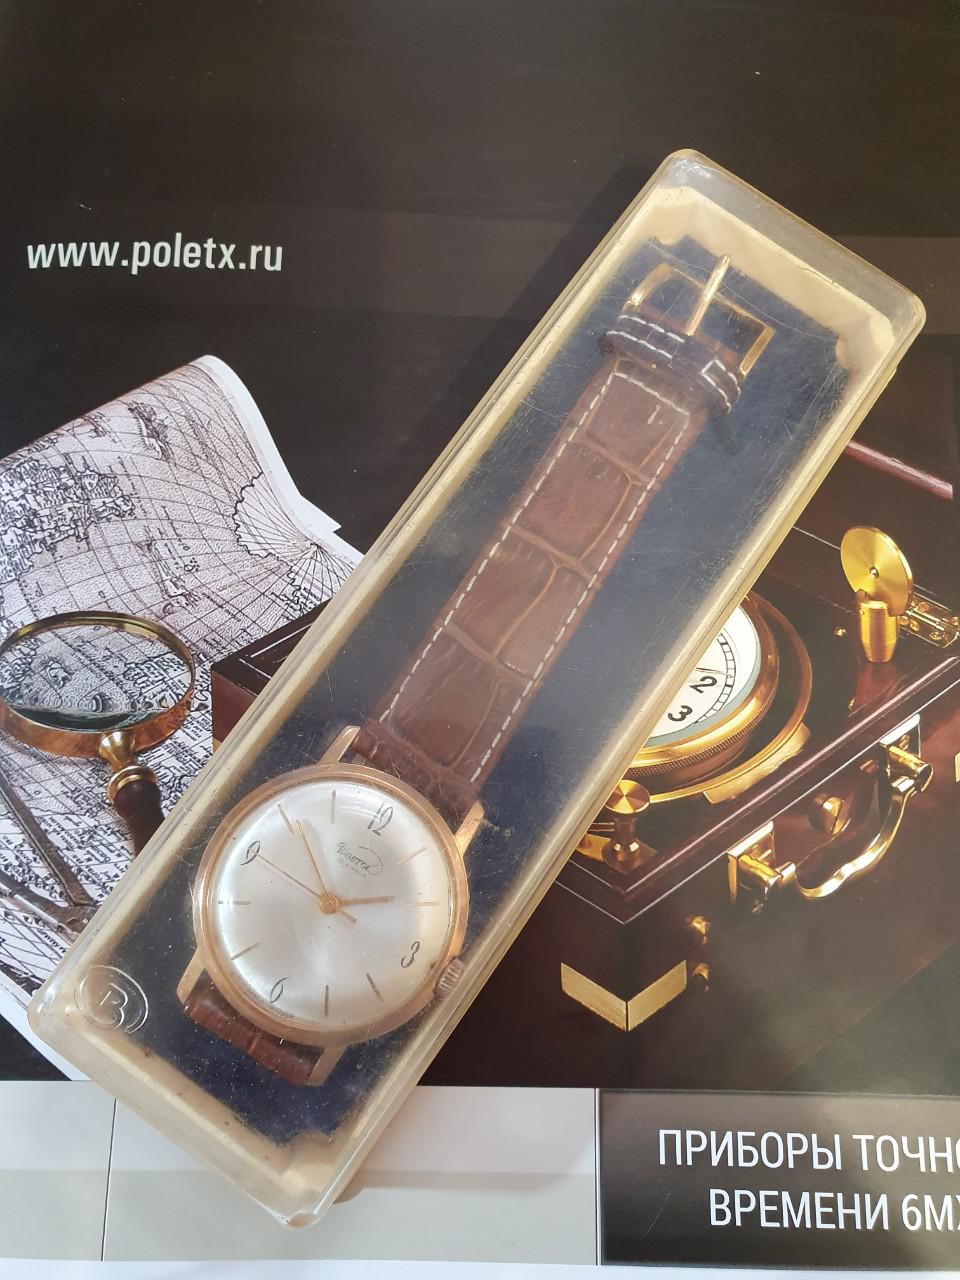 Đồng hồ cổ Vostok Export - Đồng hồ Vostok xuất khẩu siêu hiếm